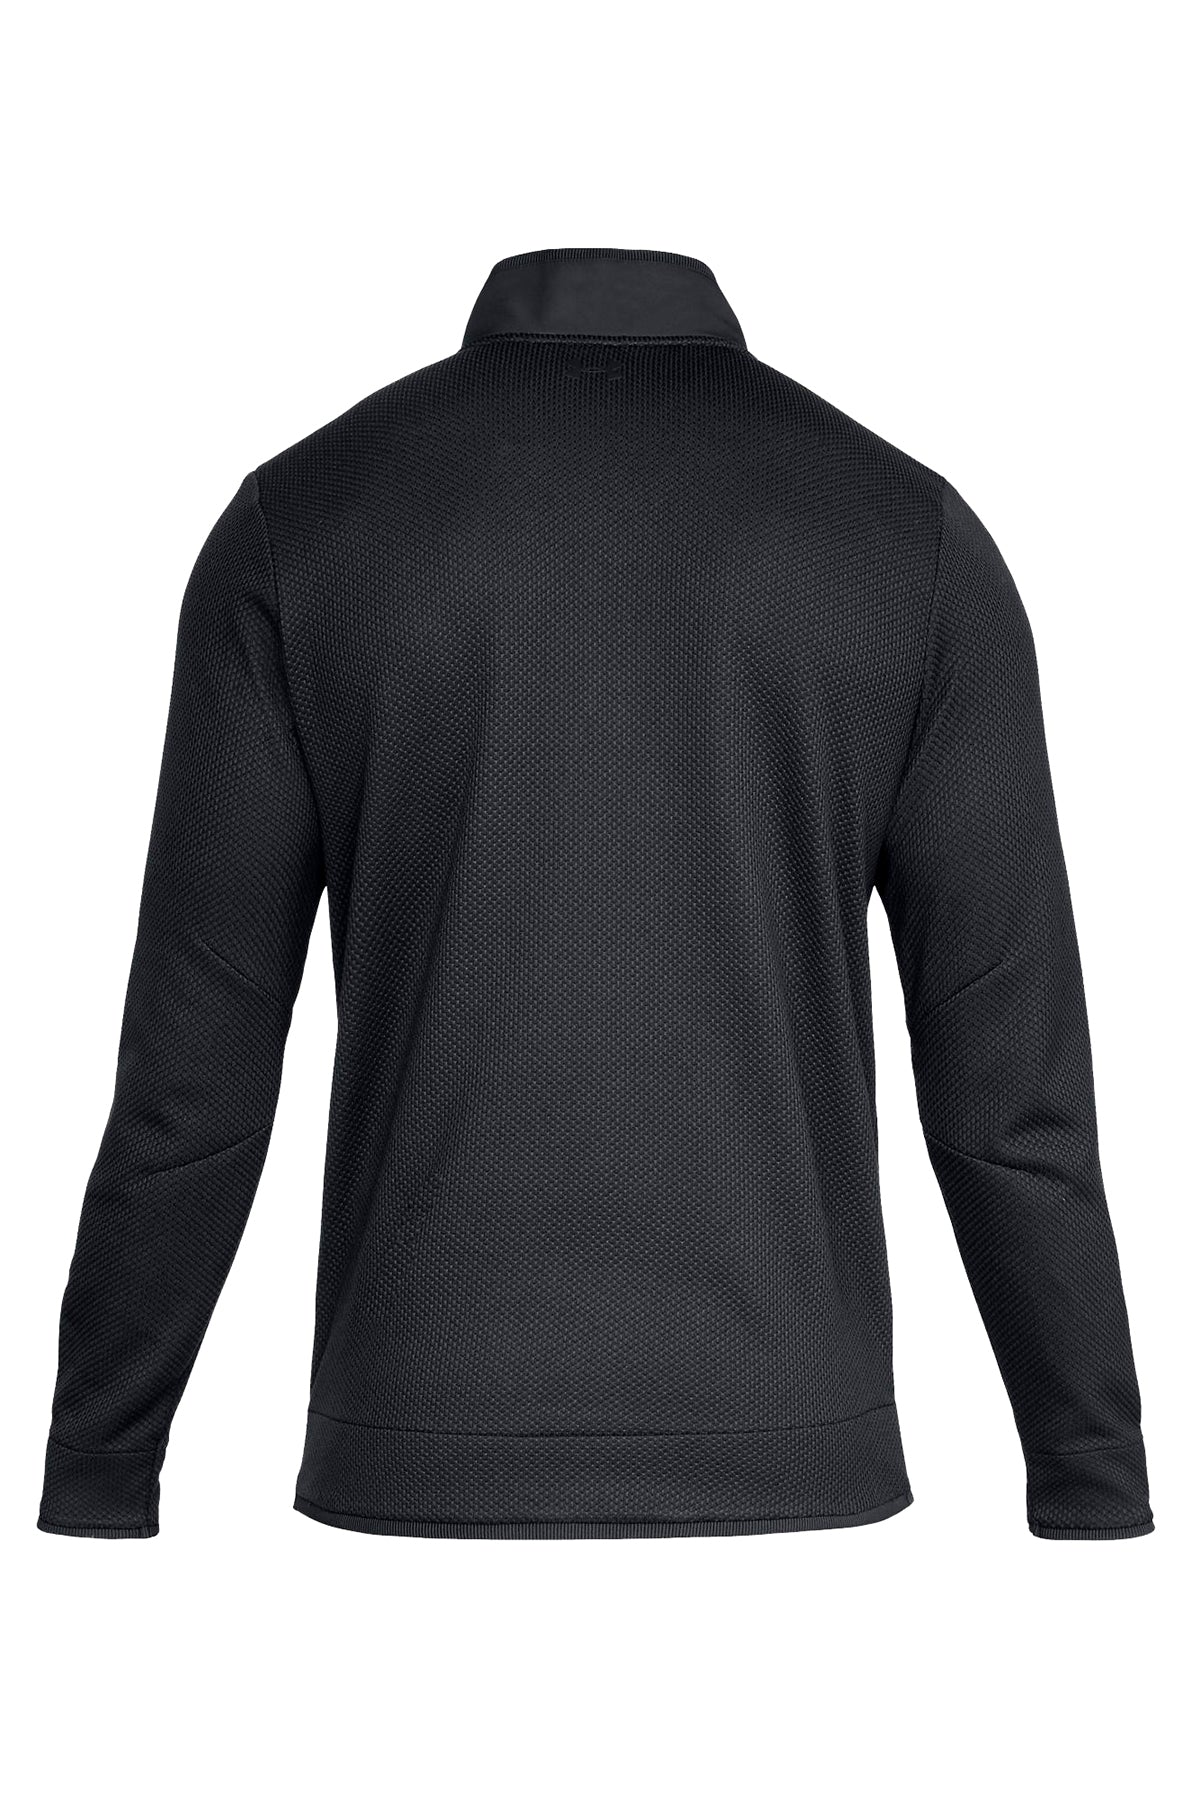 Under Armour Black UA Storm Sweater Fleece Snap Mock Pullover